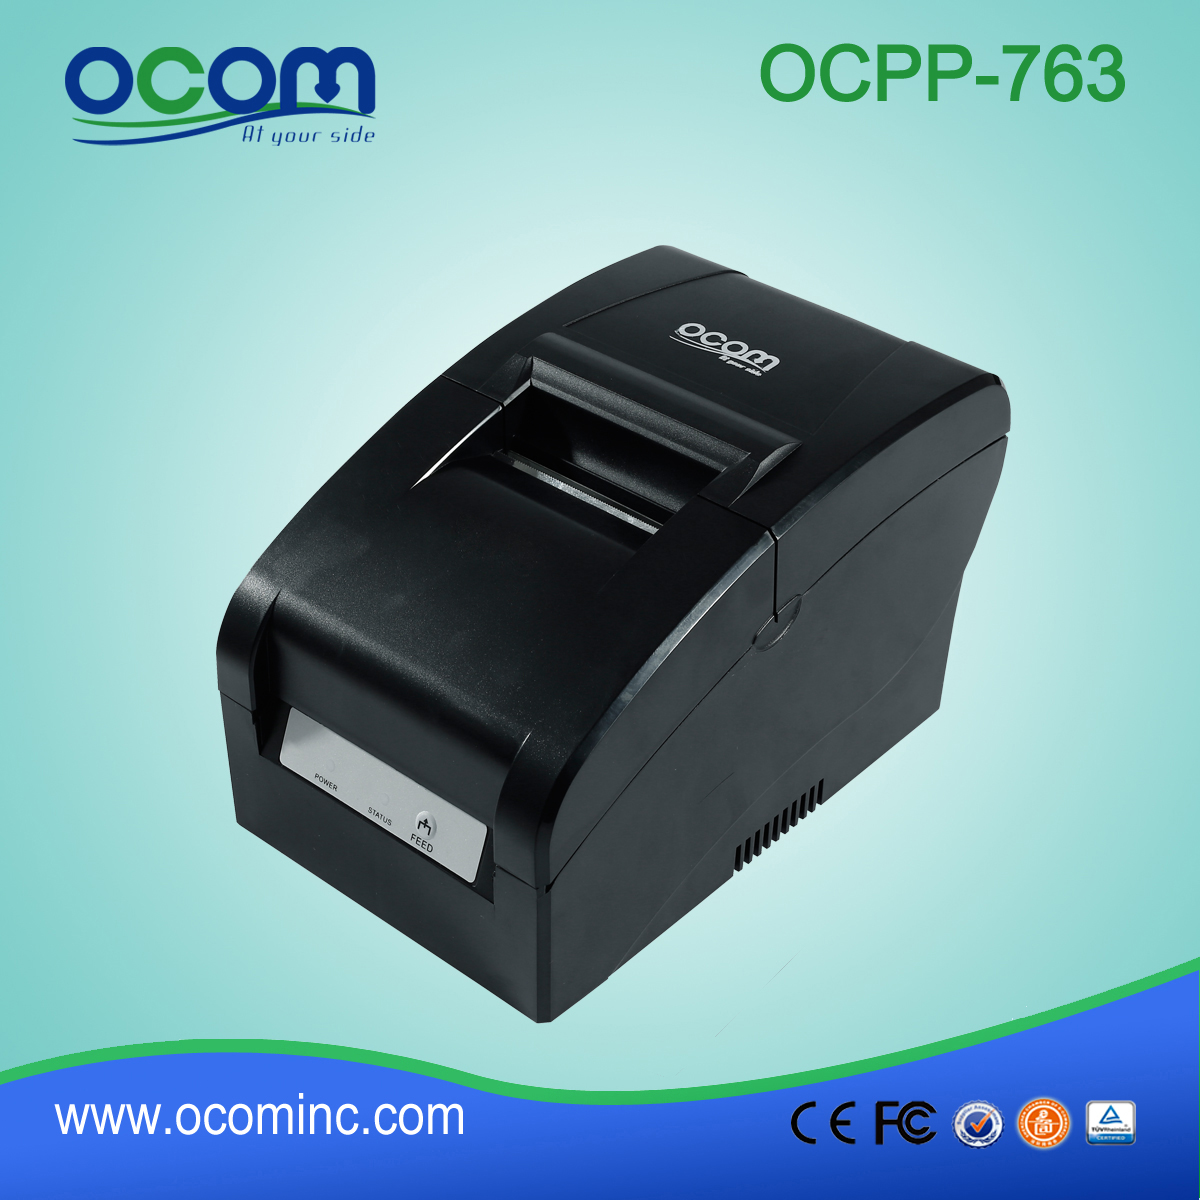 OCPP-763 Mini Impact Dot Matrix εκτυπωτής με μέγεθος χαρτιού πλάτους 76 mm για το μητρώο μετρητών